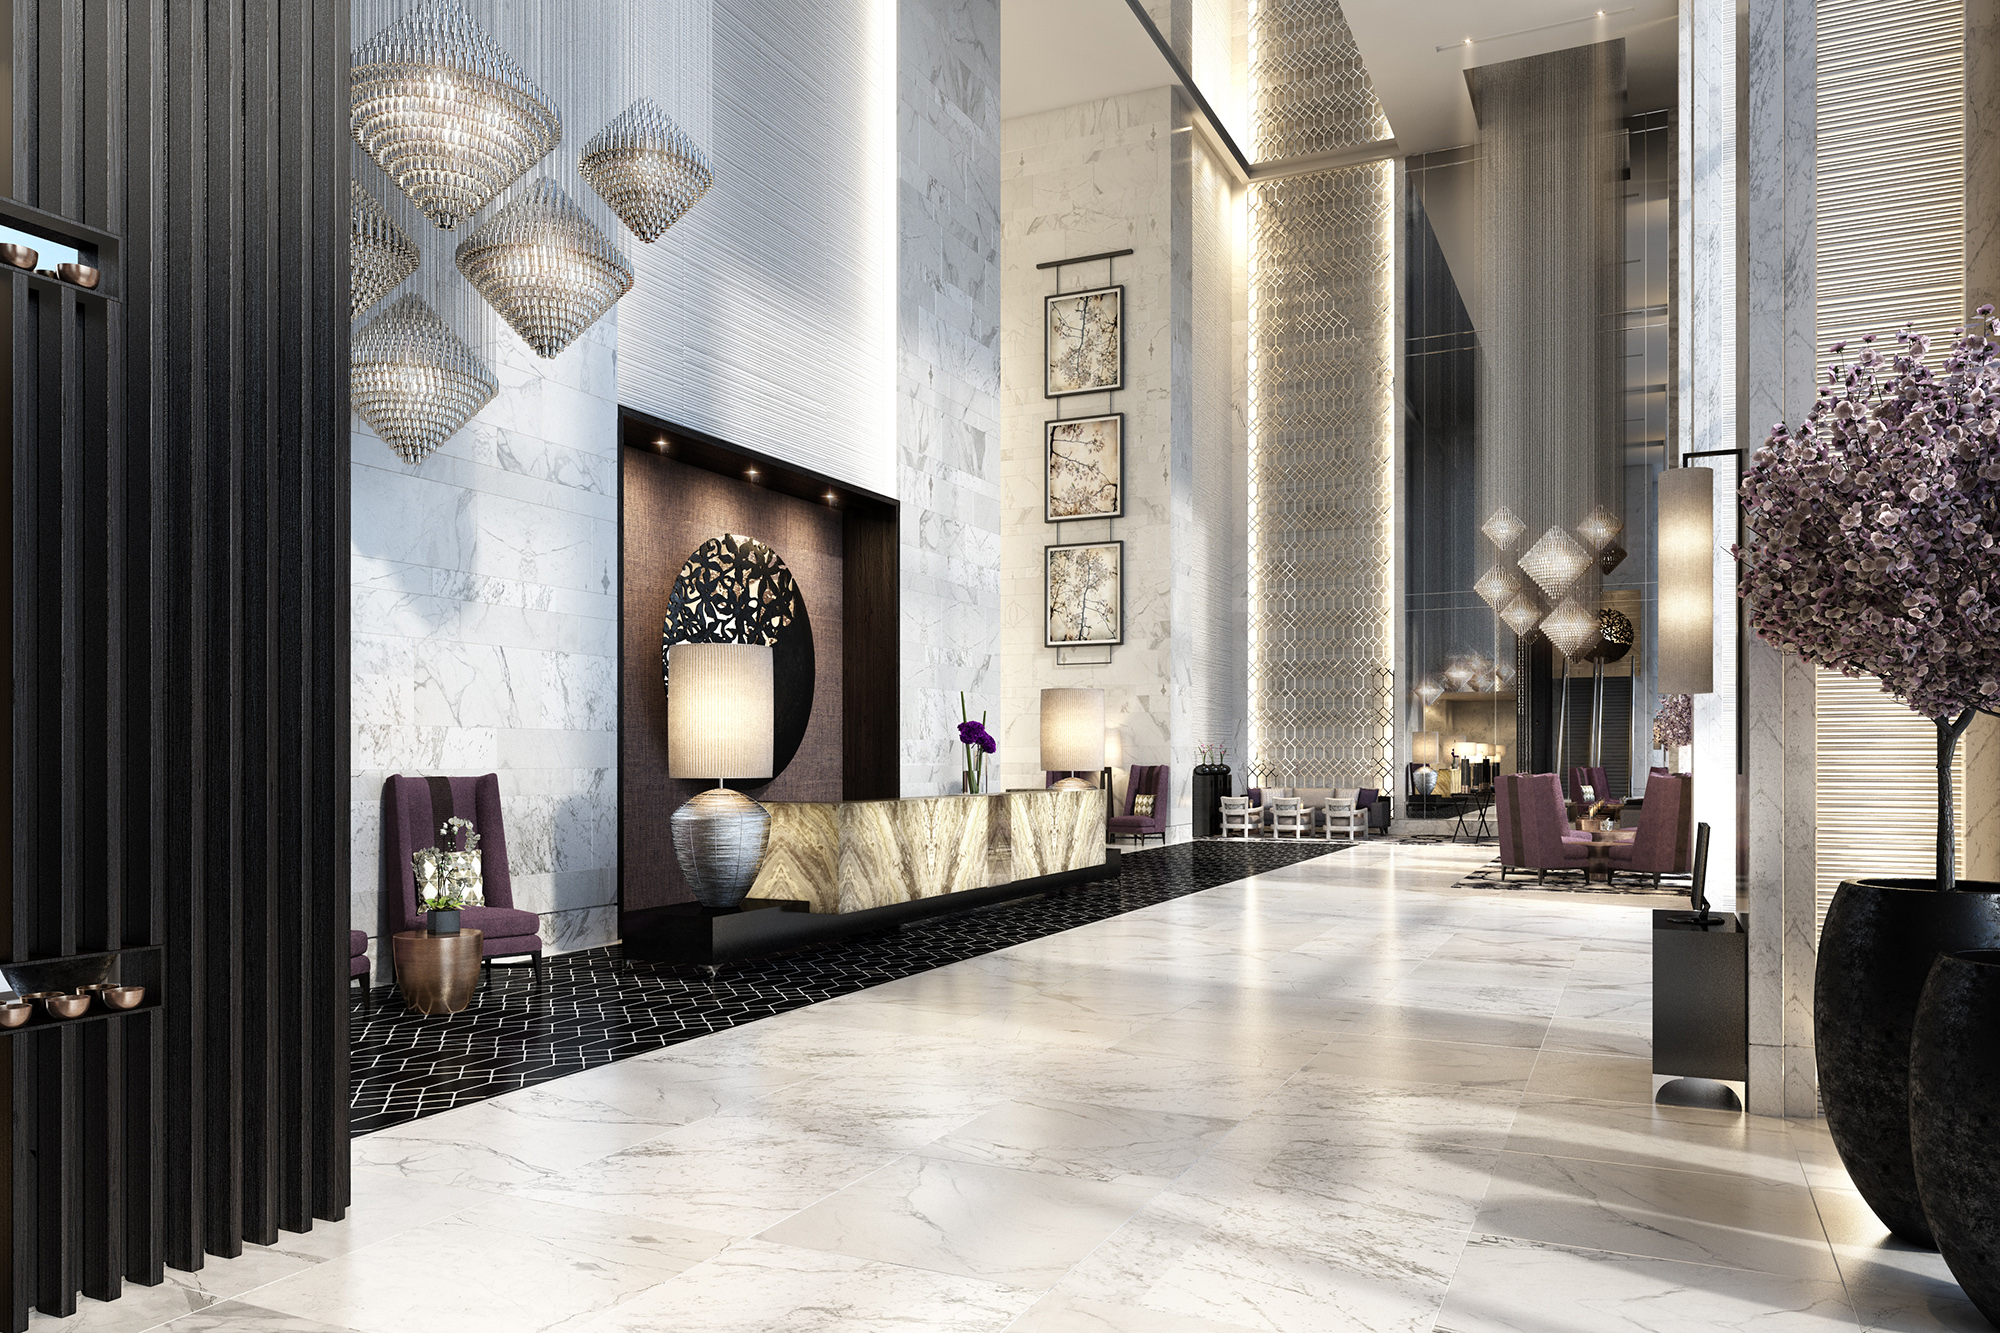 Steigenberger Hotel Business Bay in Dubai - Lobby